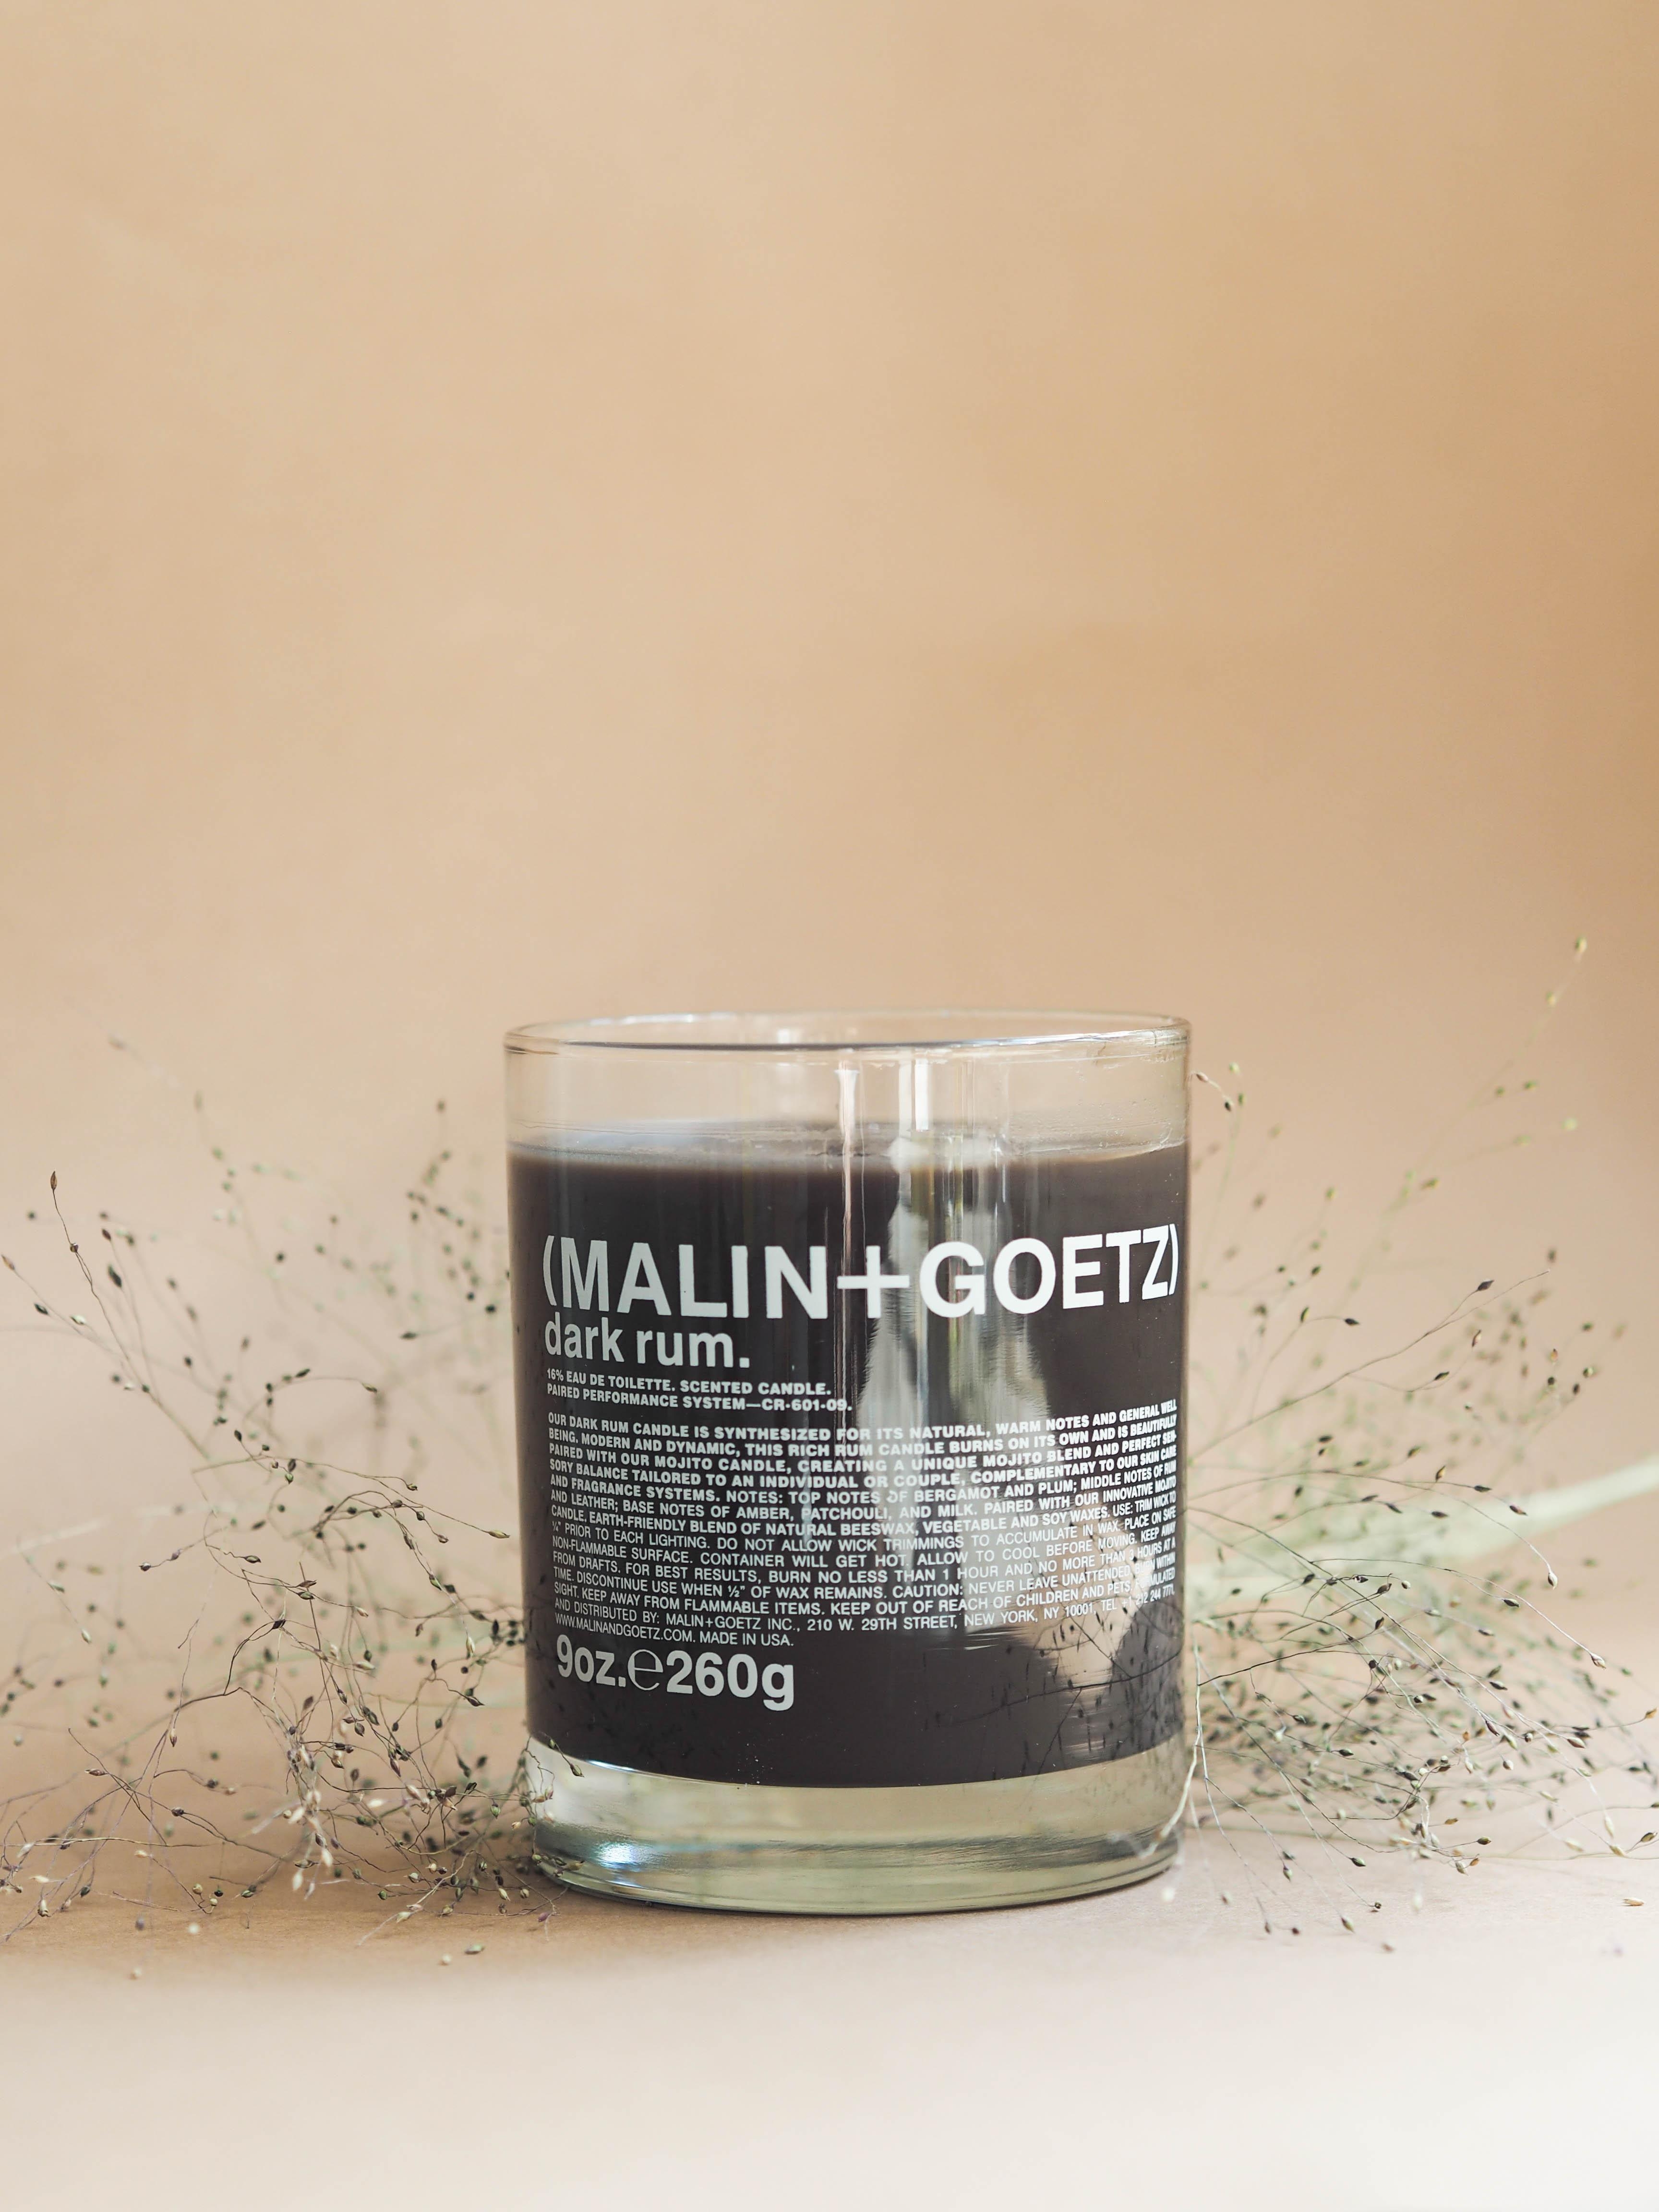 Handgefertigt in Brooklyn, bringt die Kerze von Malin+Goetz würziges Rum-Aroma in die Bude #beautylieblinge #malin+goetz